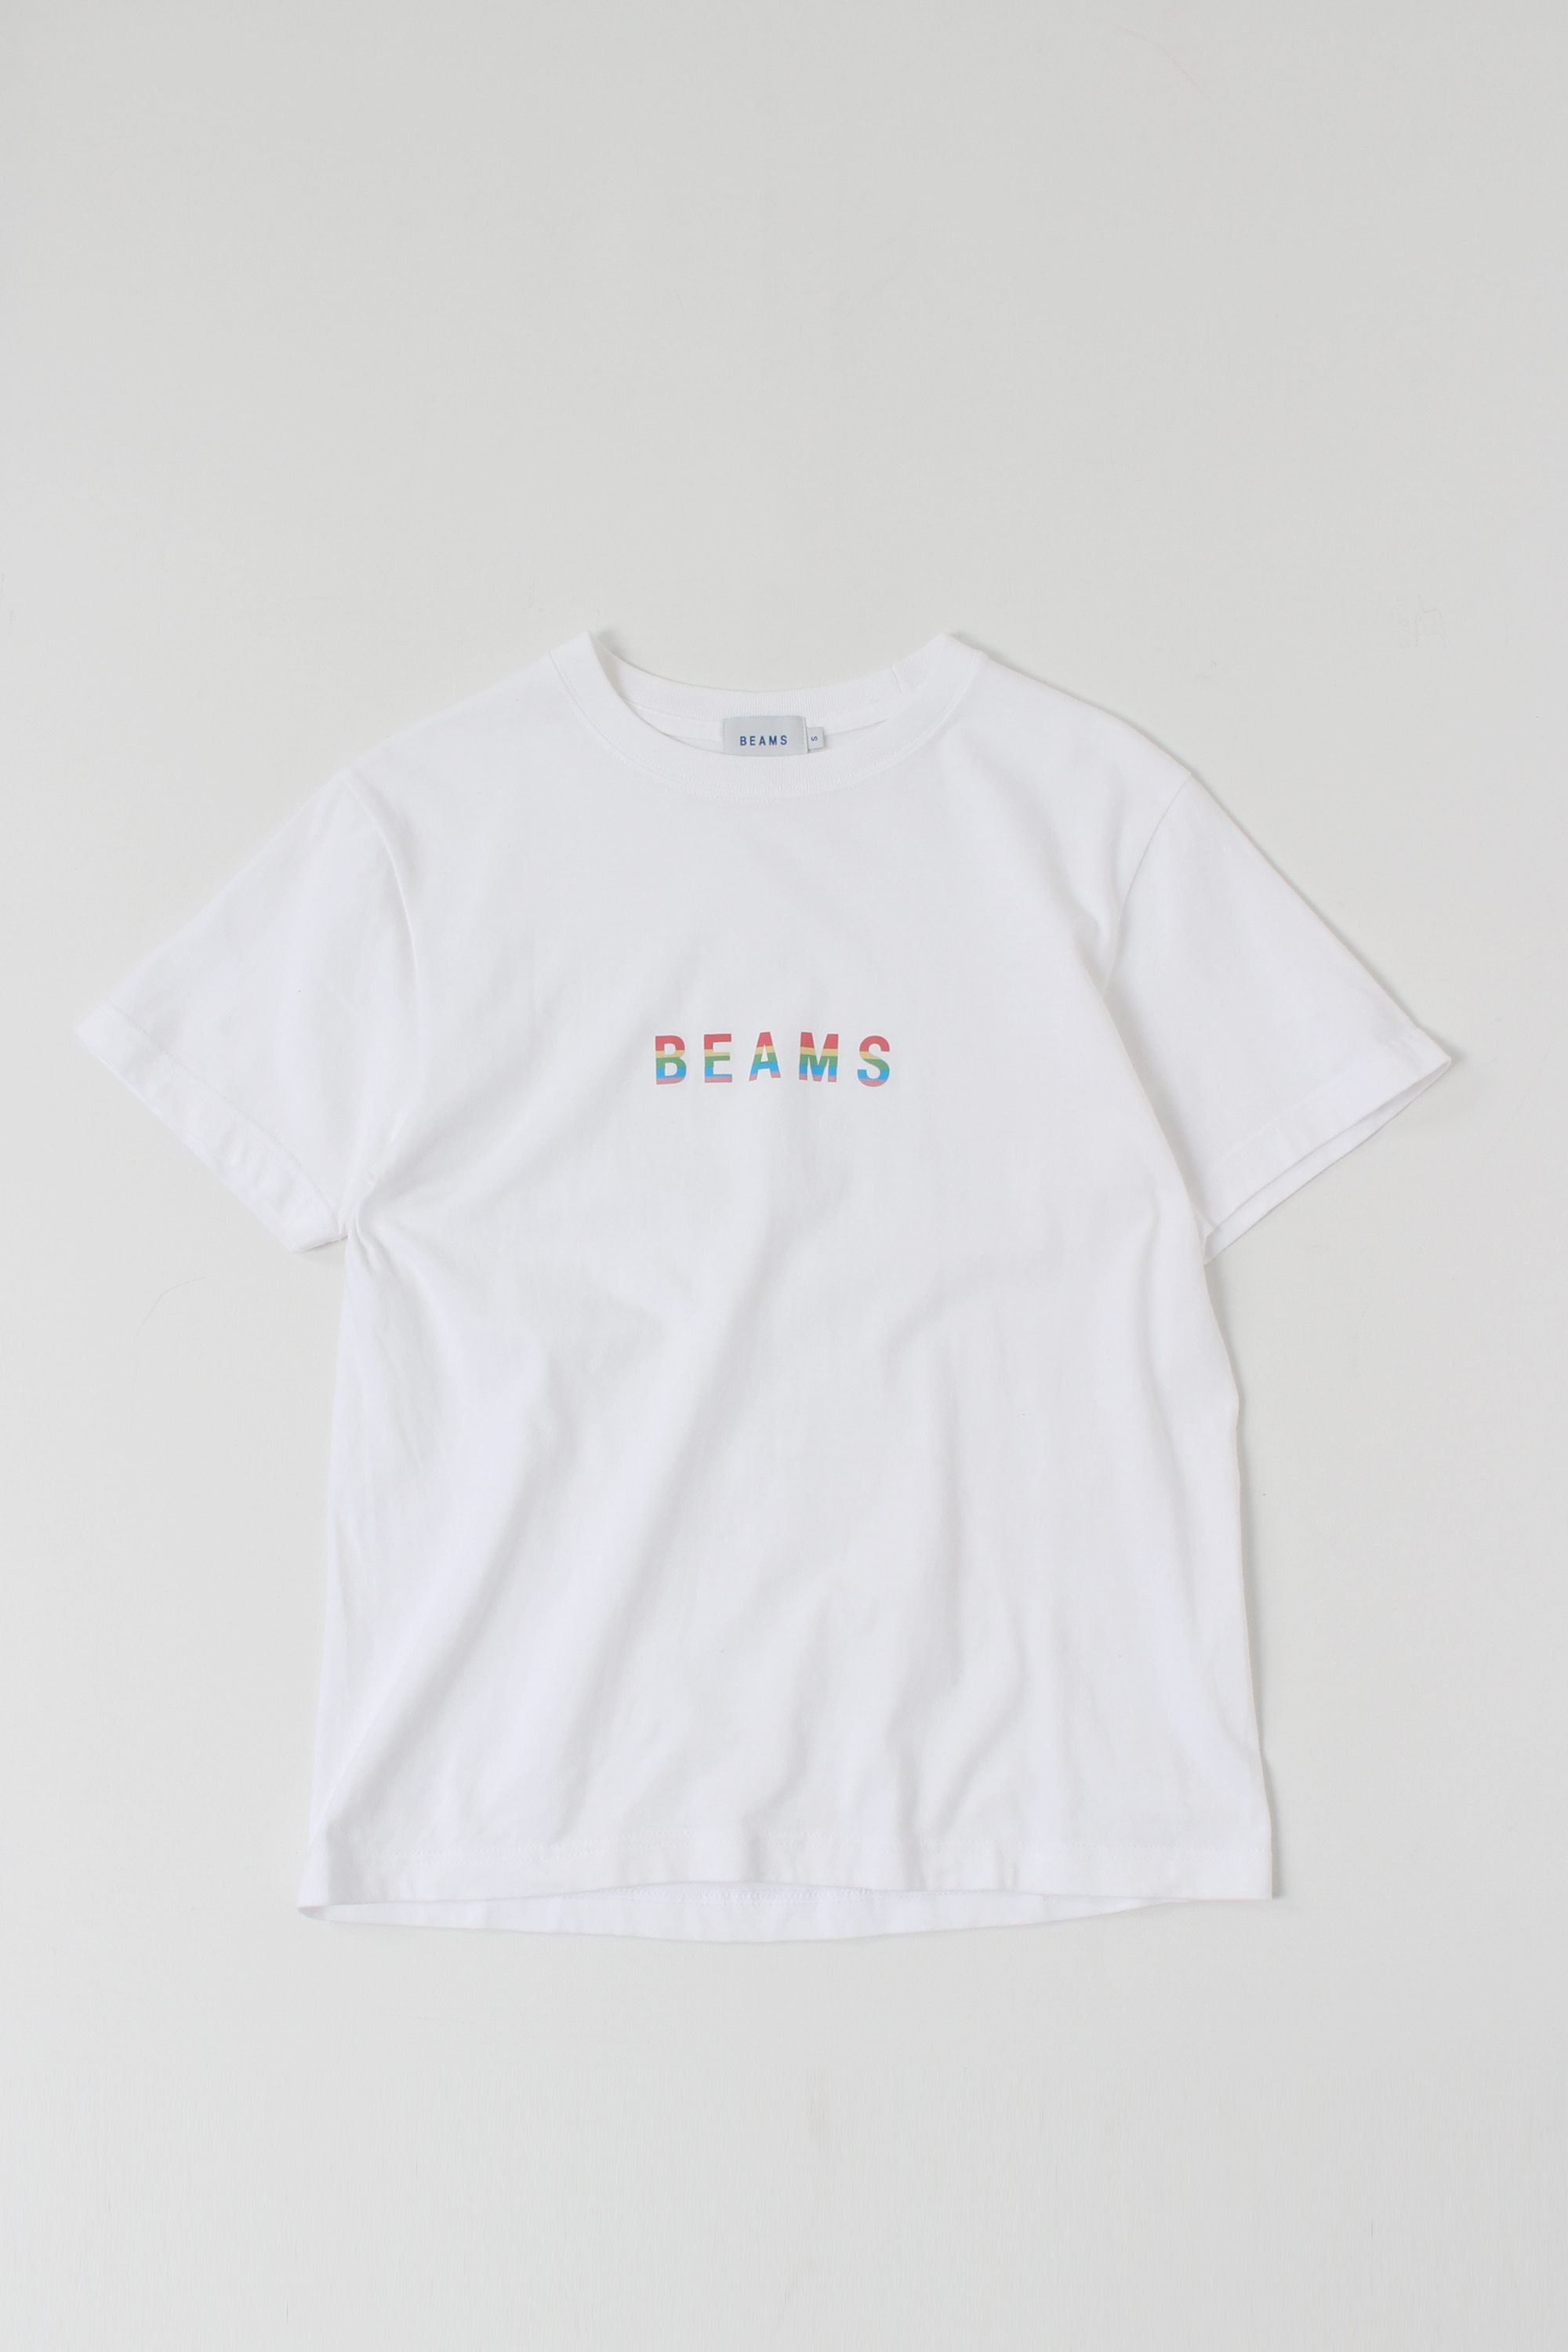 BEAMS Logo Short sleeve(S)